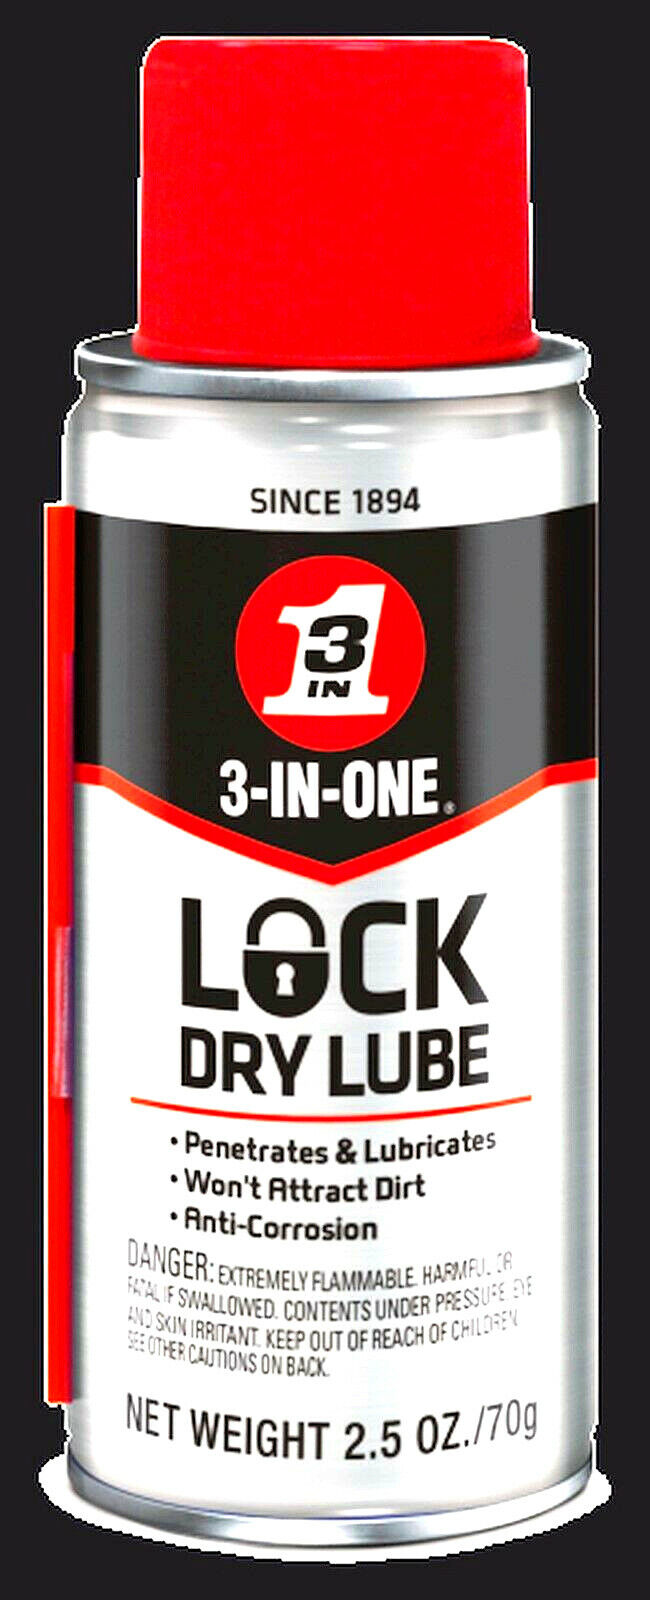 Lock DRY LUBE 2.5 oz spraY can lubricant for locks padlocks 3-IN-ONE Oil 120077